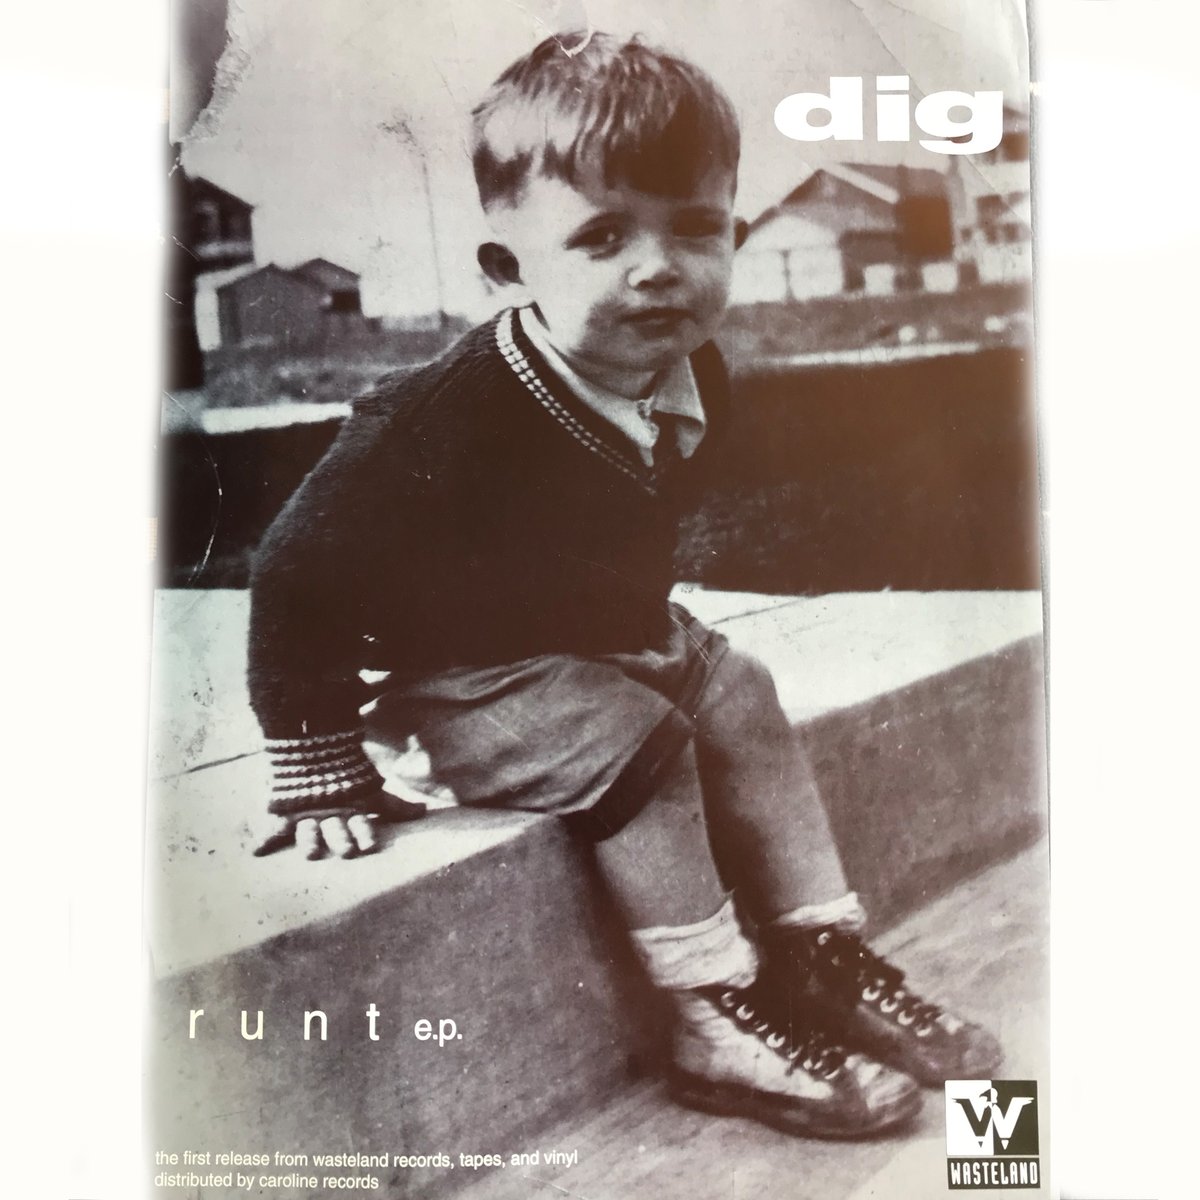 Image of official - dig - "runt" promo poster / original album release poster